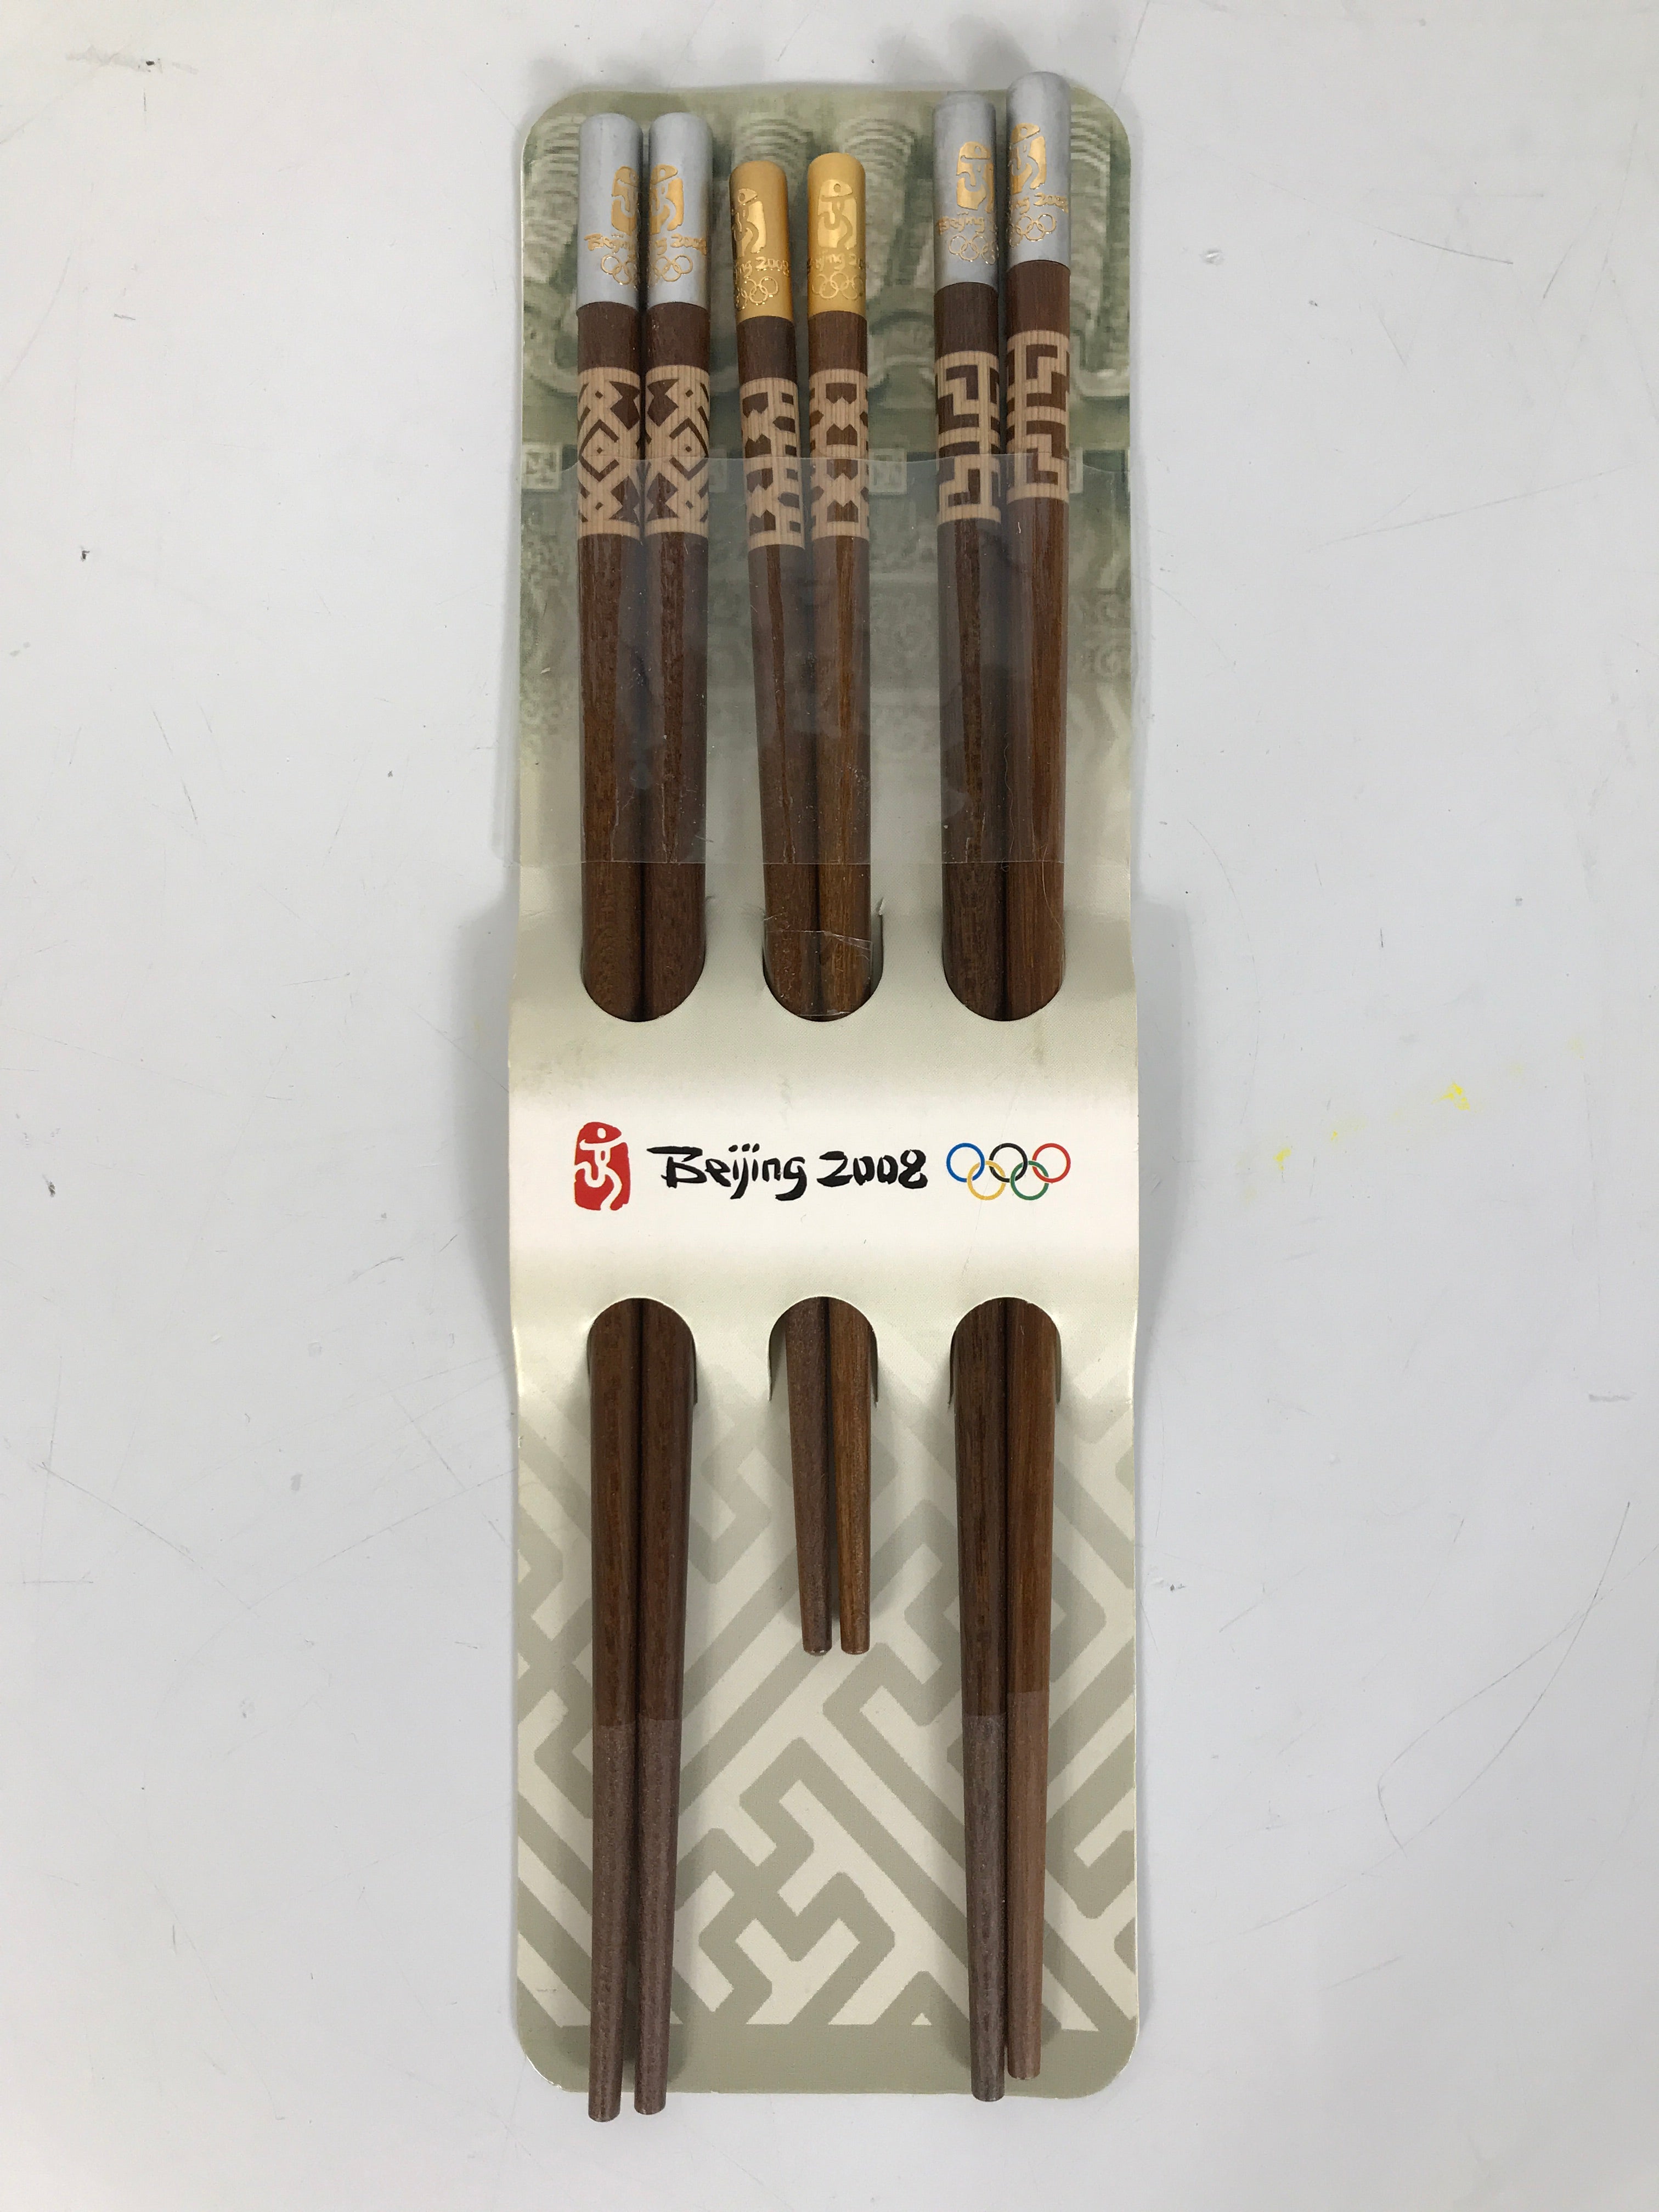 Beijing 2008 Olympics Commemorative Chopstick Set *New*